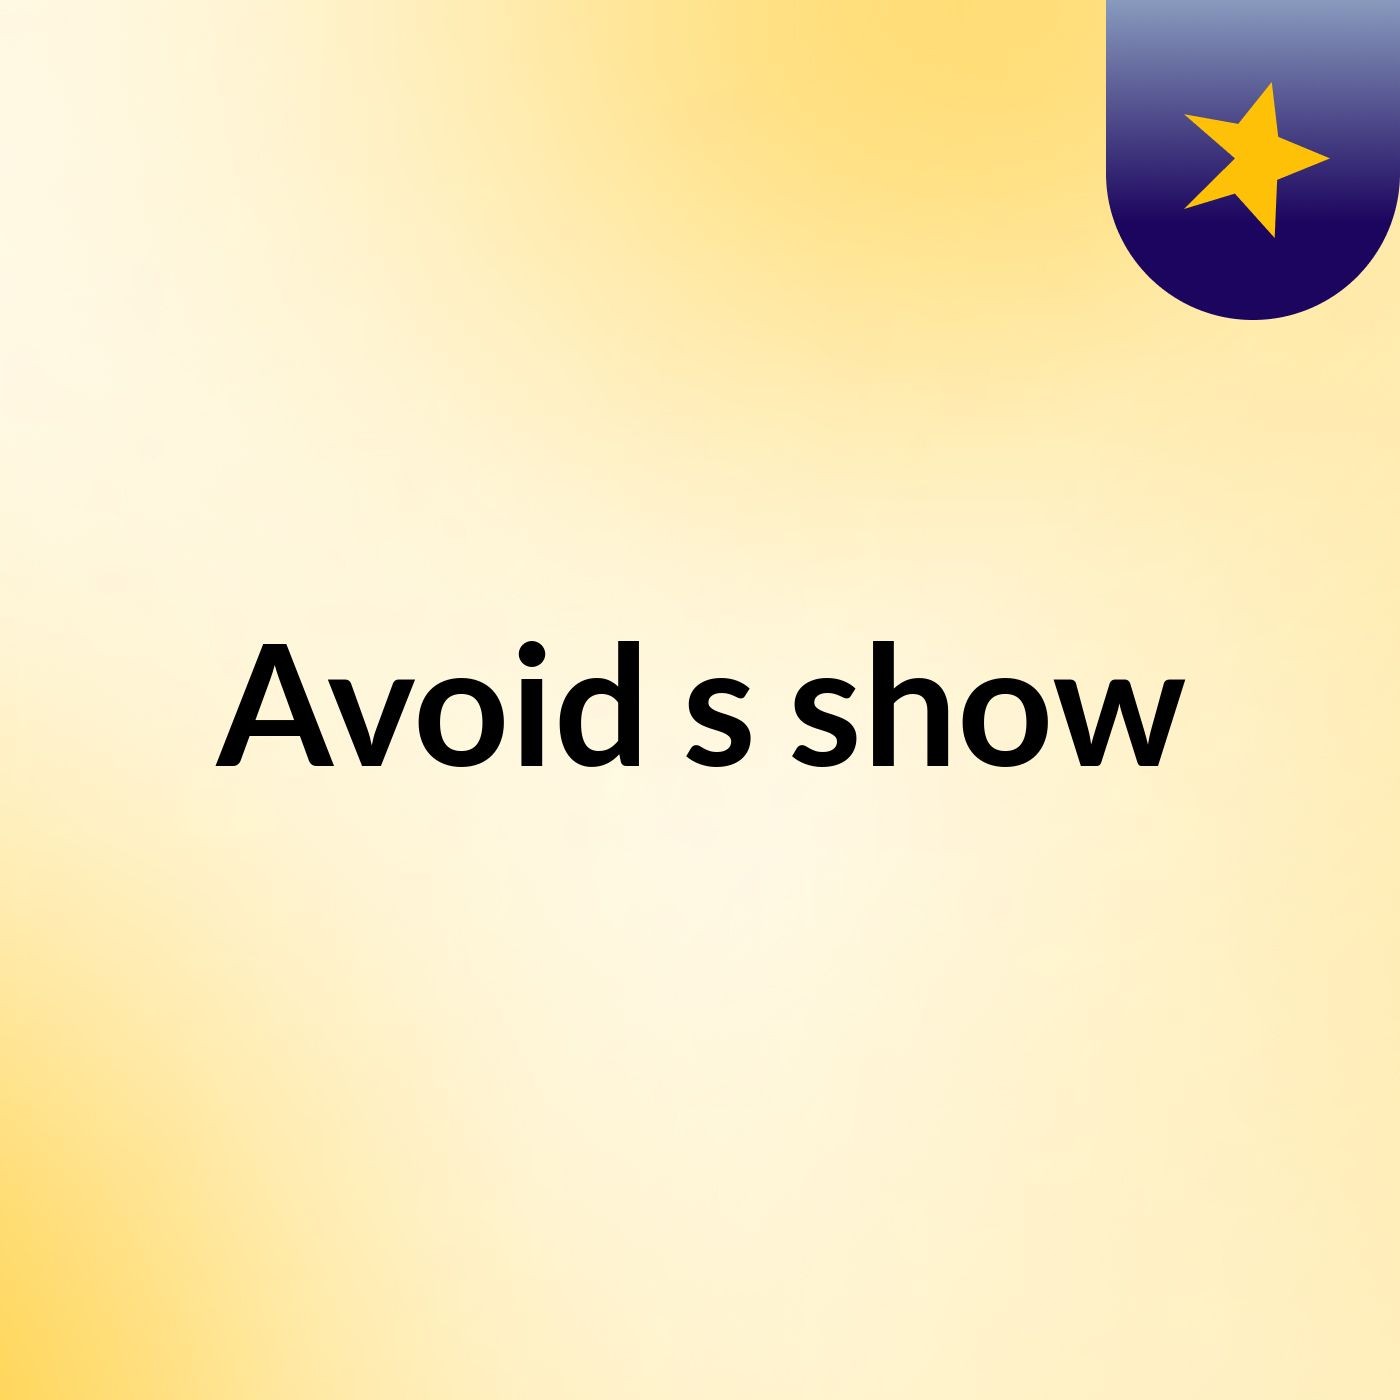 Avoid's show